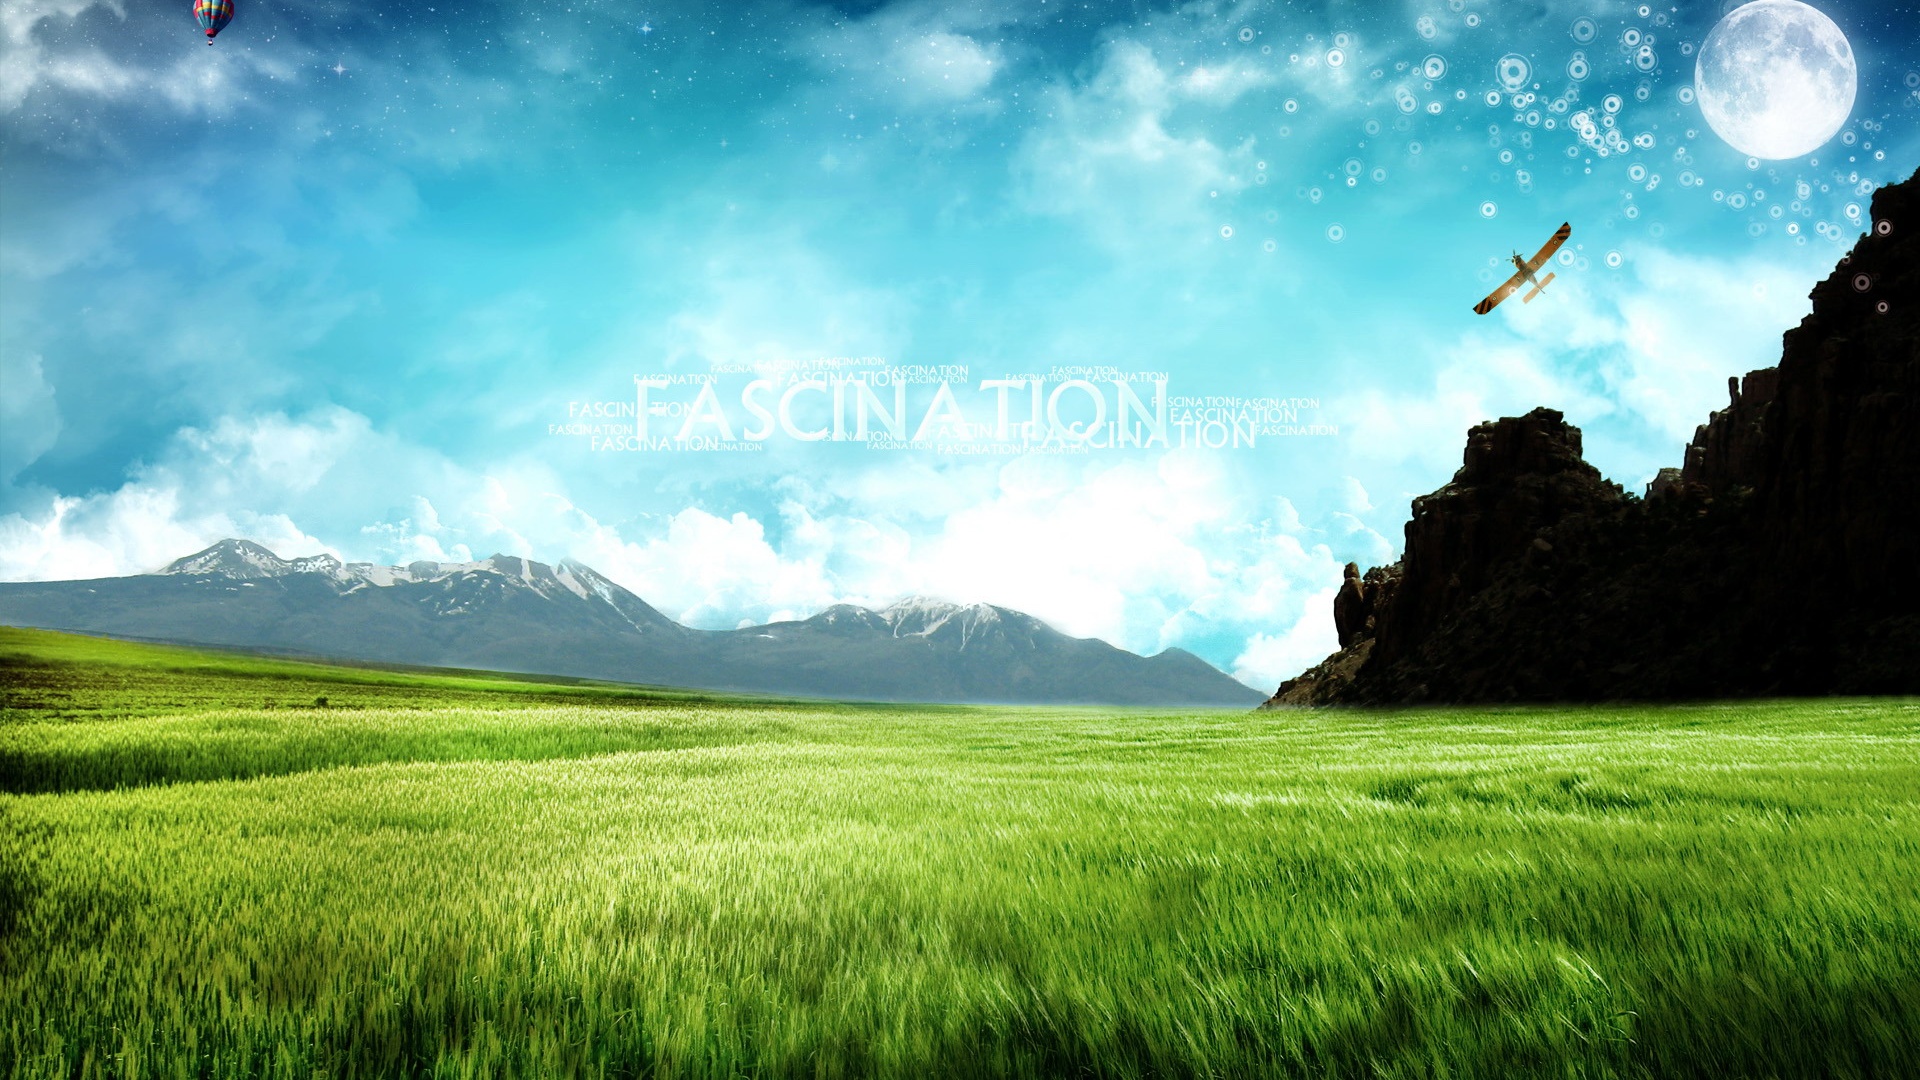 Fascination - dream - world_1920x1080.jpg